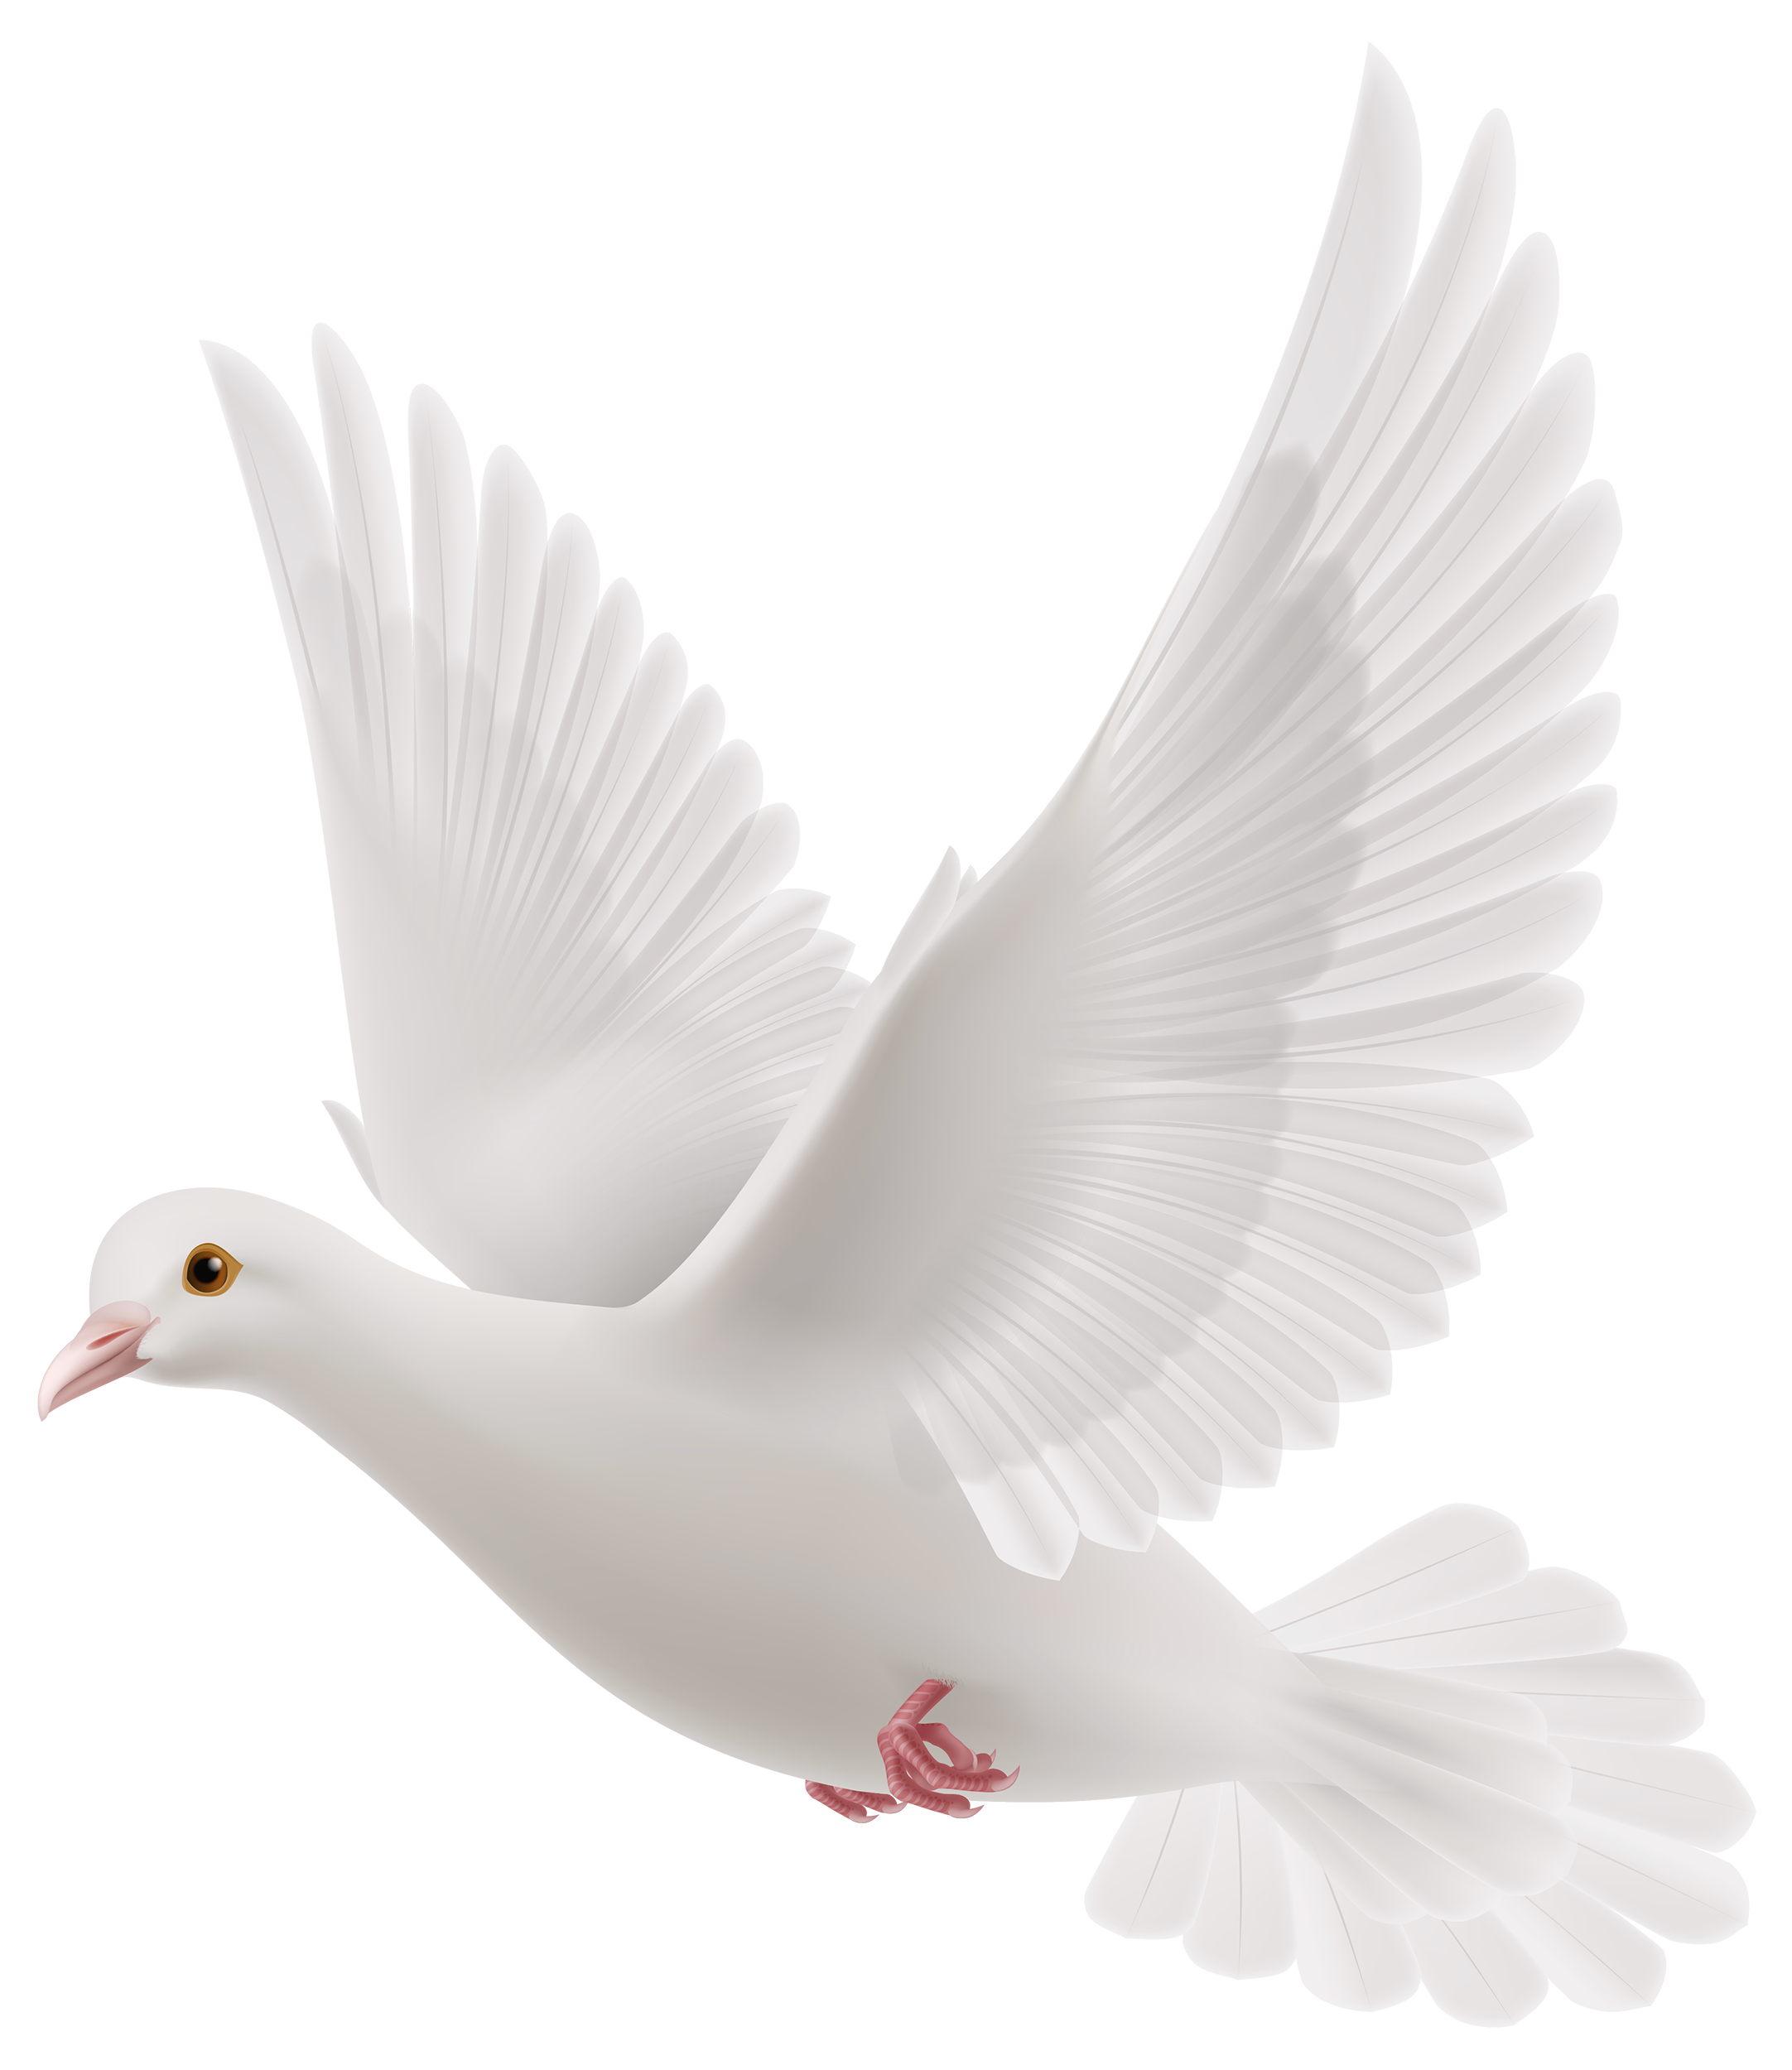 white dove birds